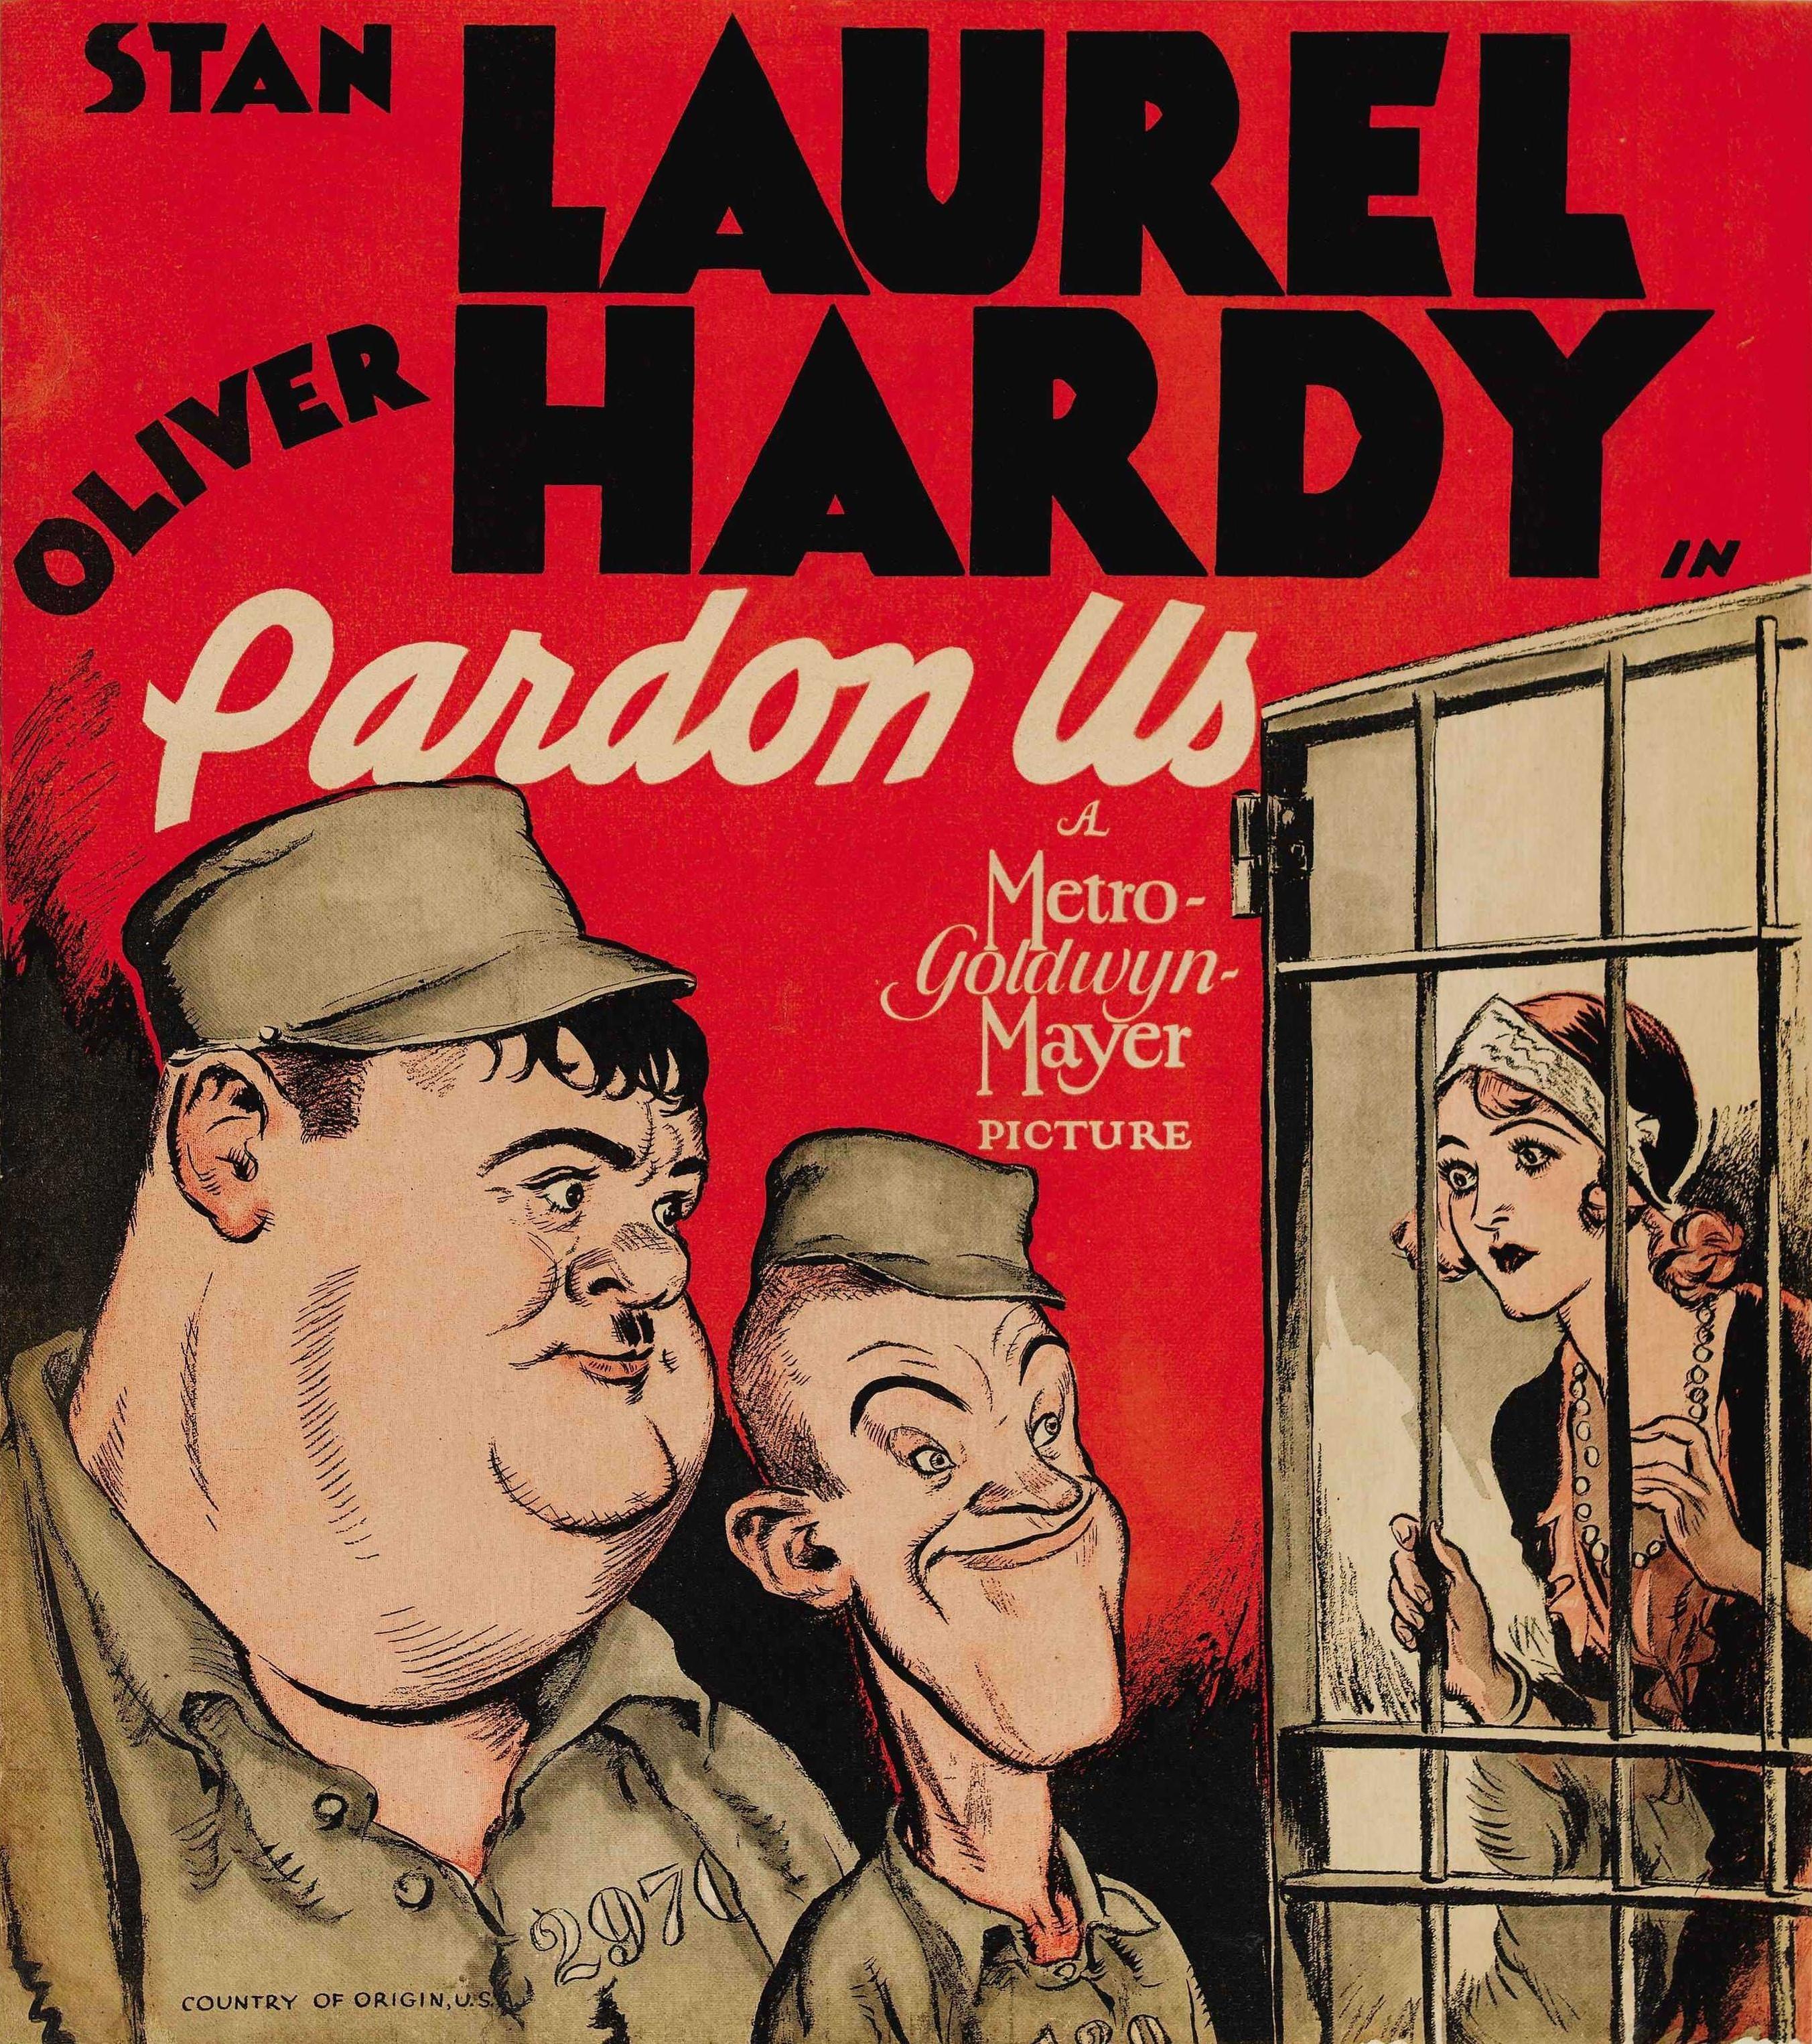 Pardon us 1931. Laurel and Hardy poster plakaty. Stan Laurel and Oliver Hardy poster plakaty. Laurel & Hardy Постер.